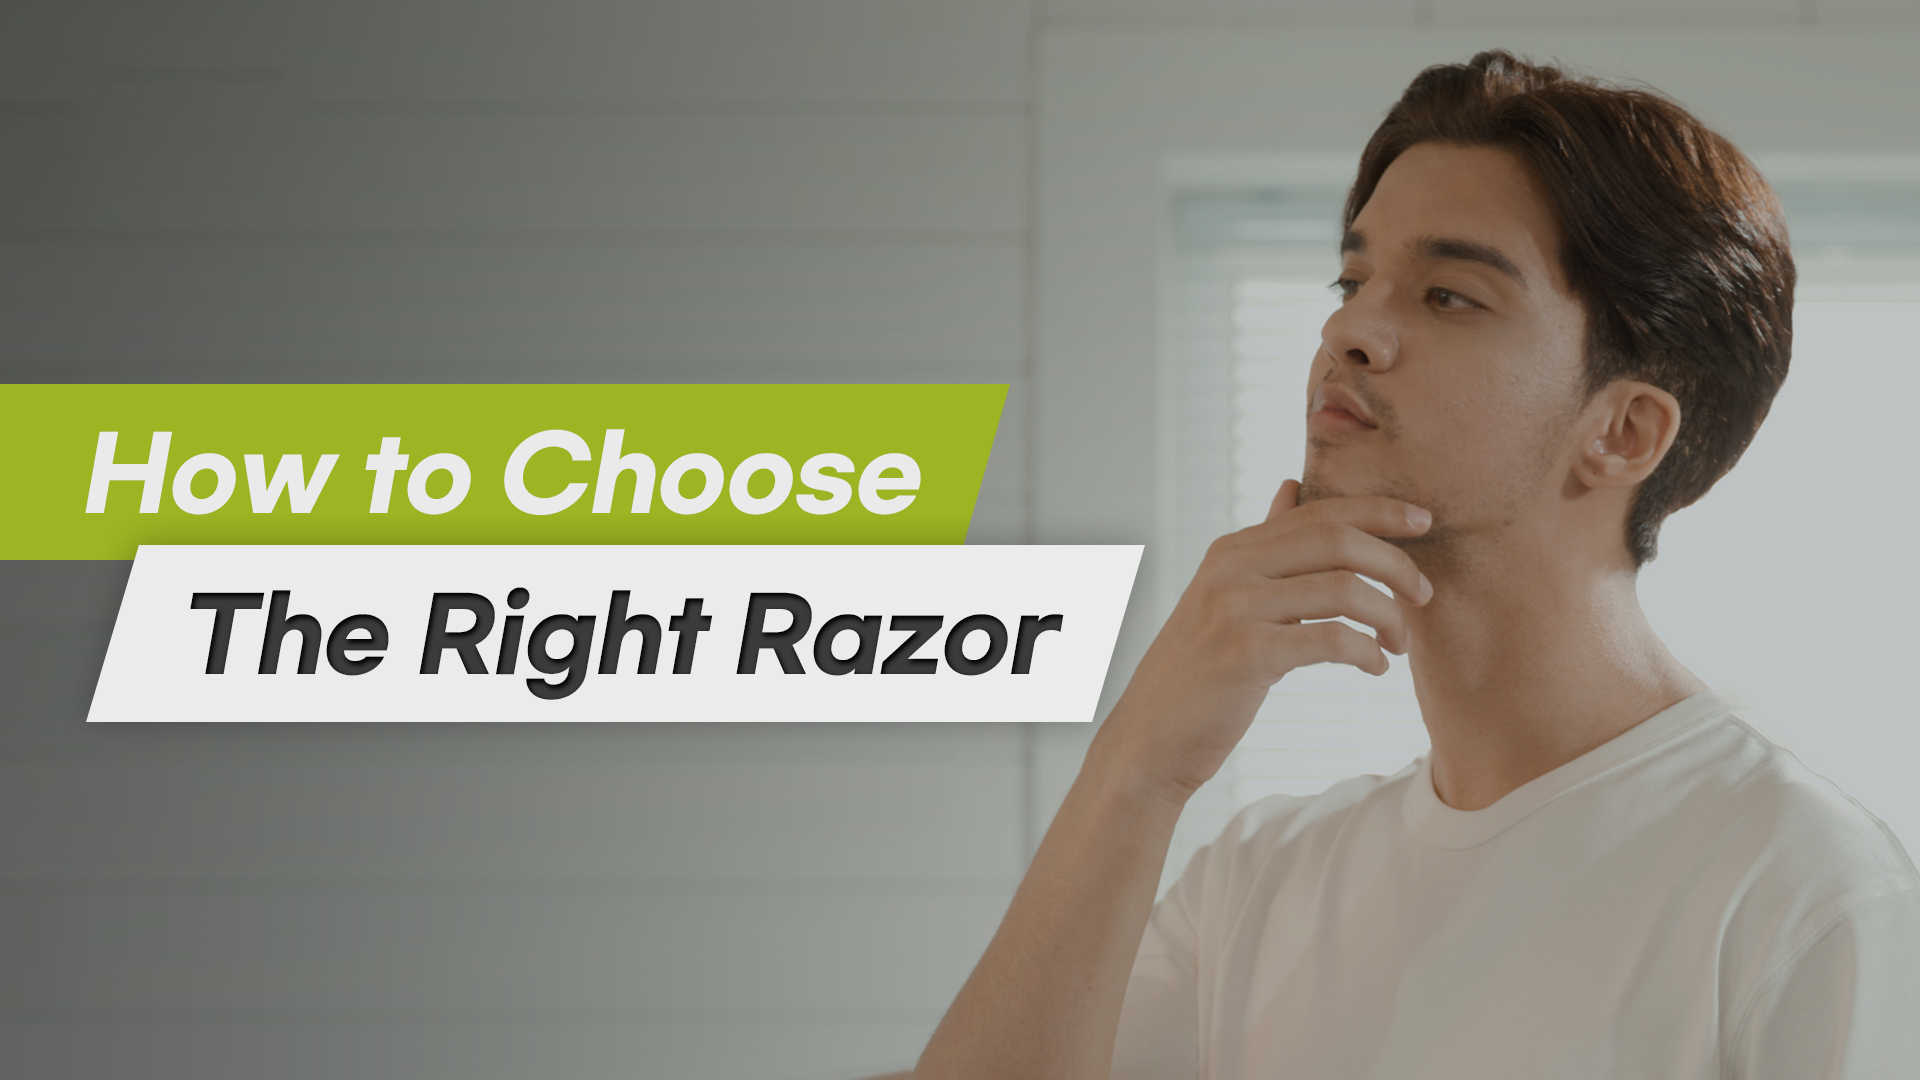 Shaving Story: How to Choose the Right Razor